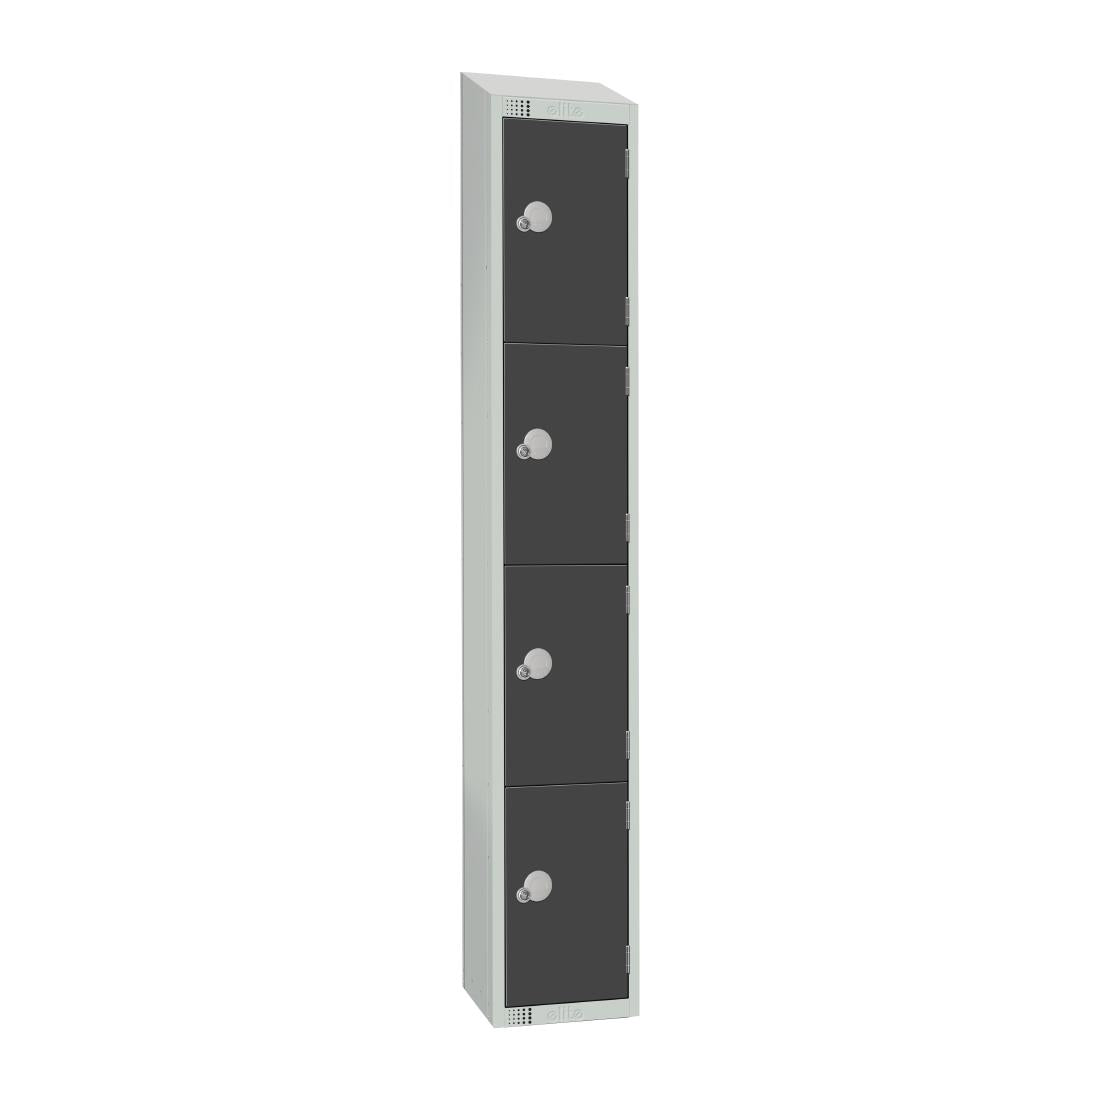 GR680-CS Elite Four Door Camlock Locker with Sloping Top Graphite Grey JD Catering Equipment Solutions Ltd